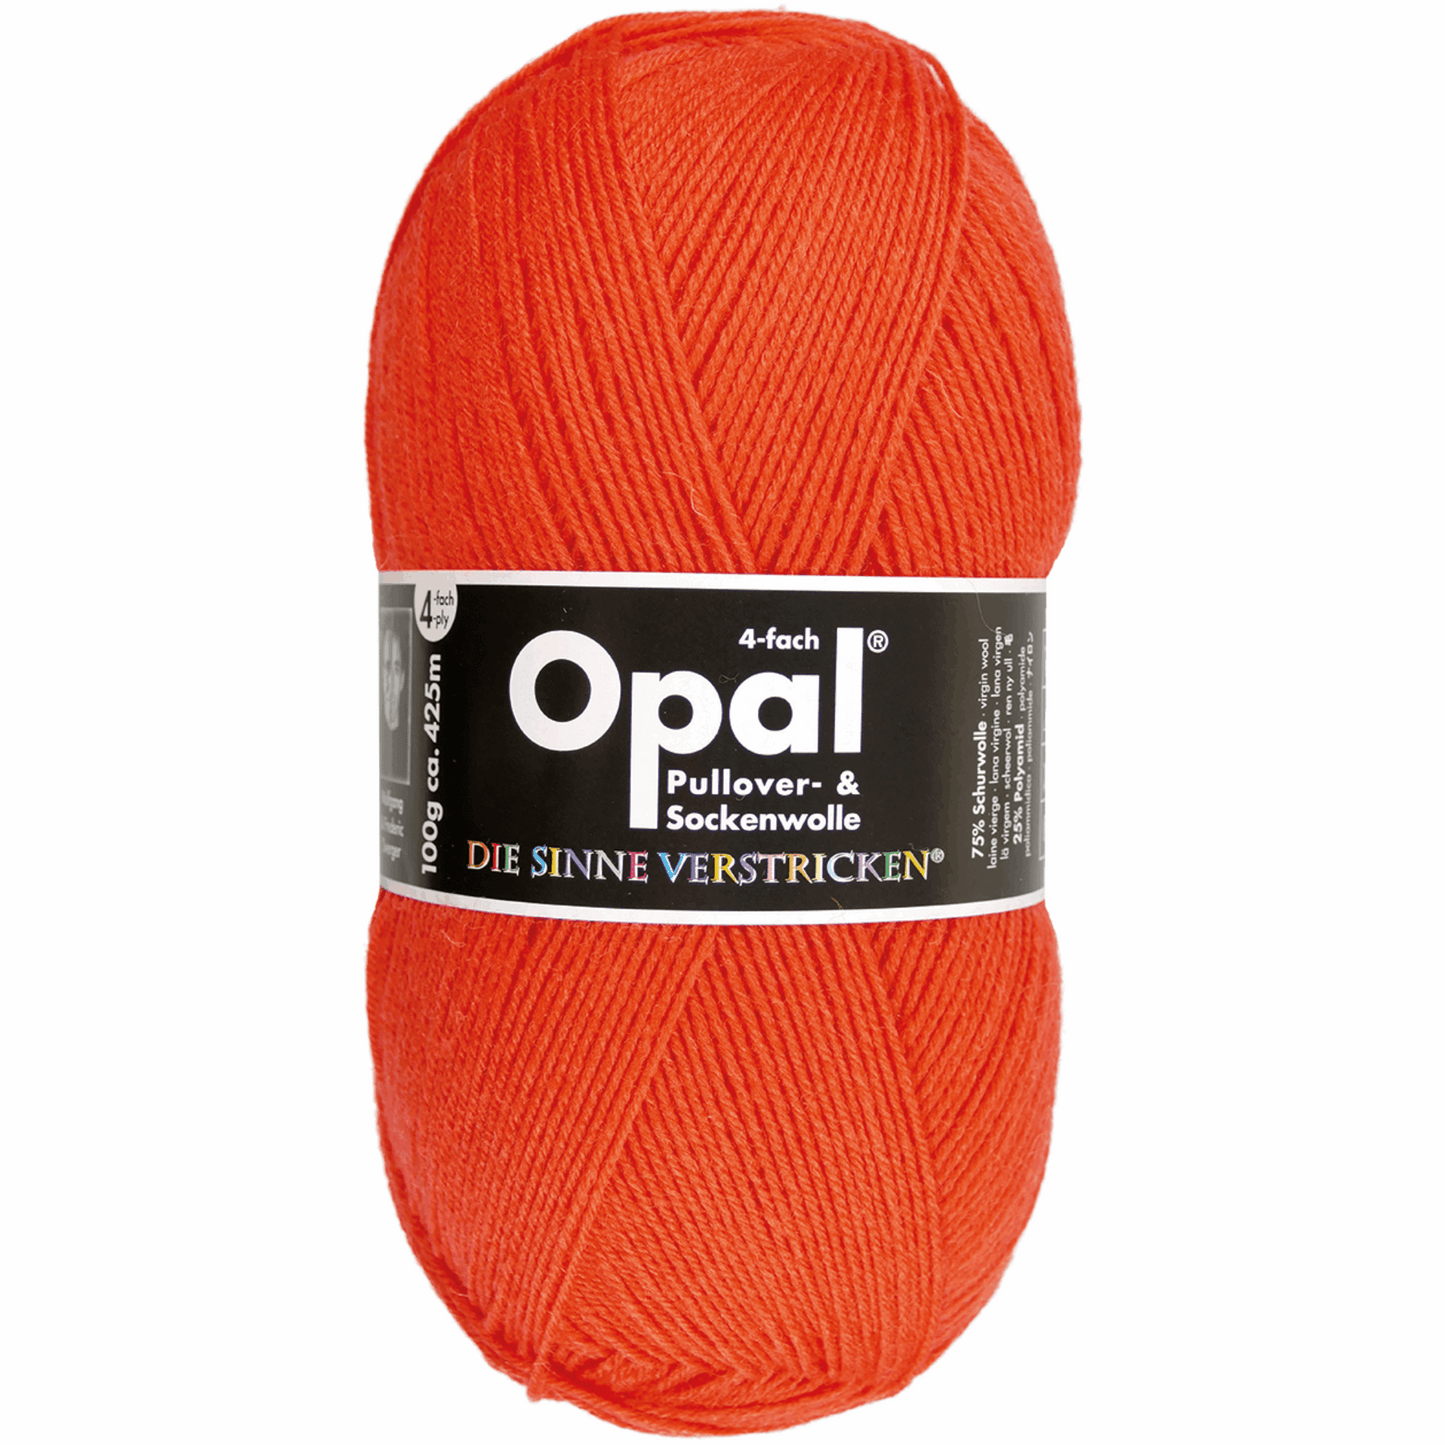 Opal plain 4 threads. 100g 2011/12, 97760, color orange 5181